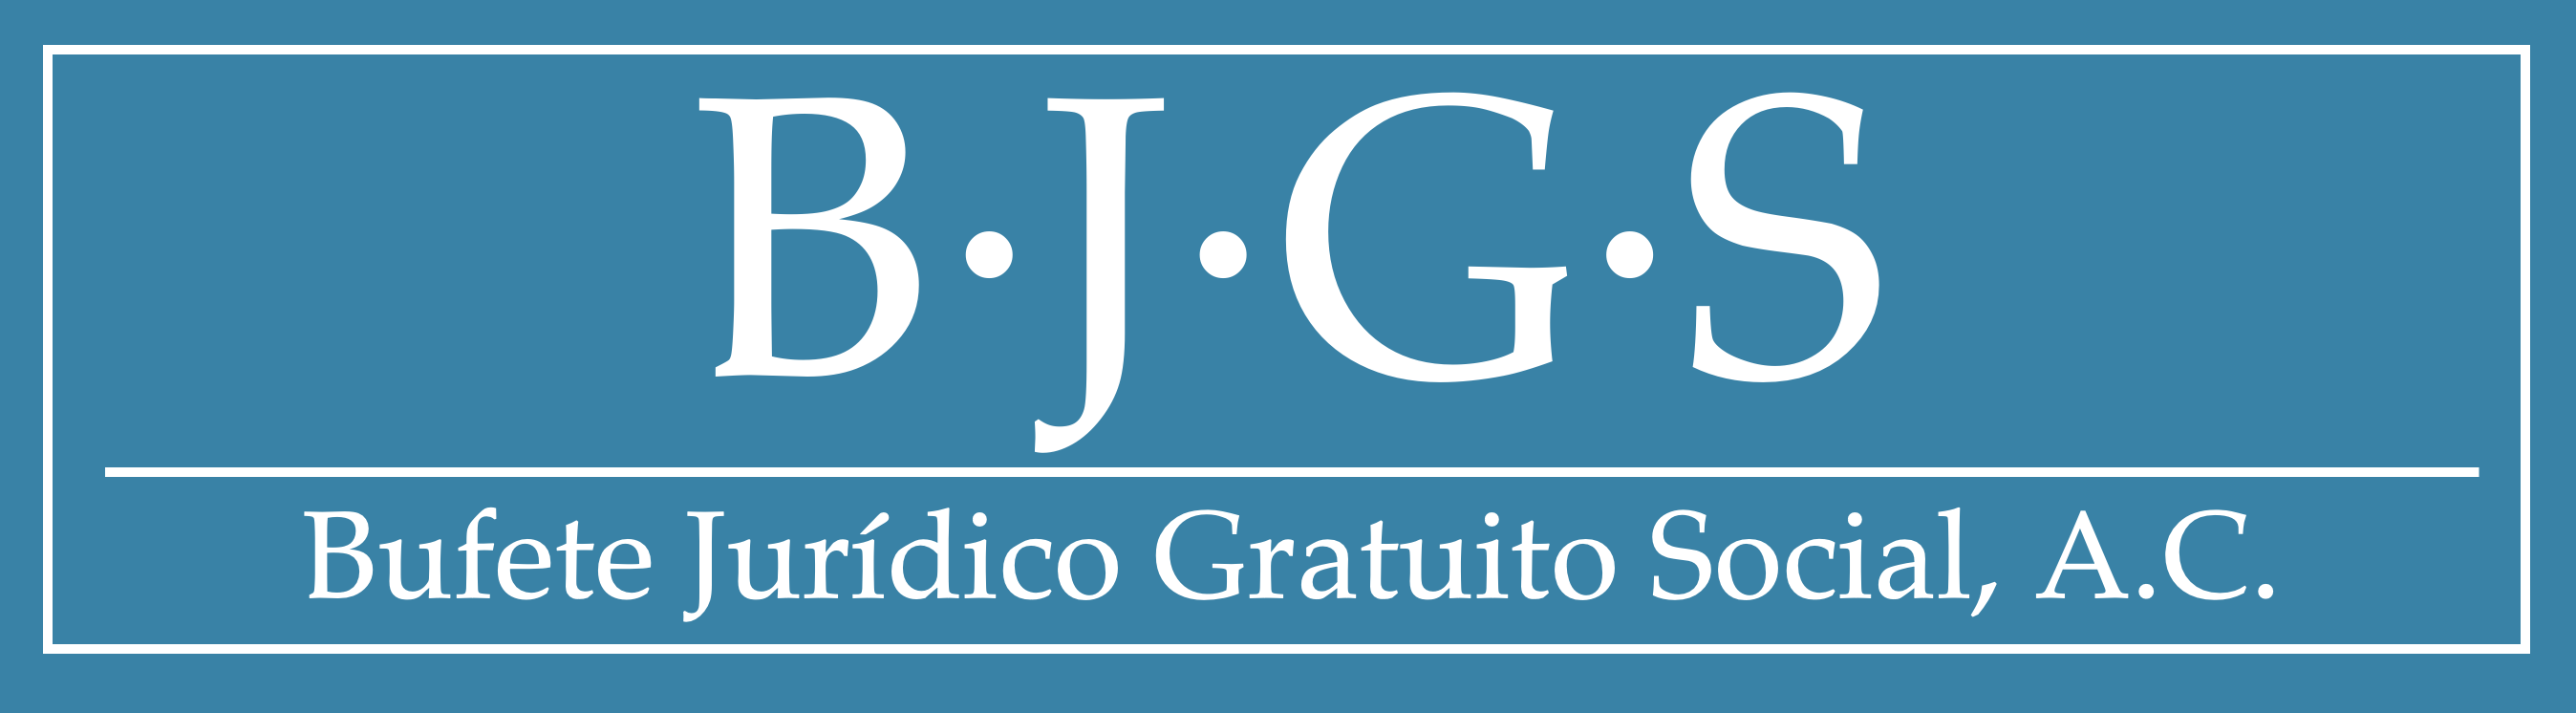 logo bjgs_1